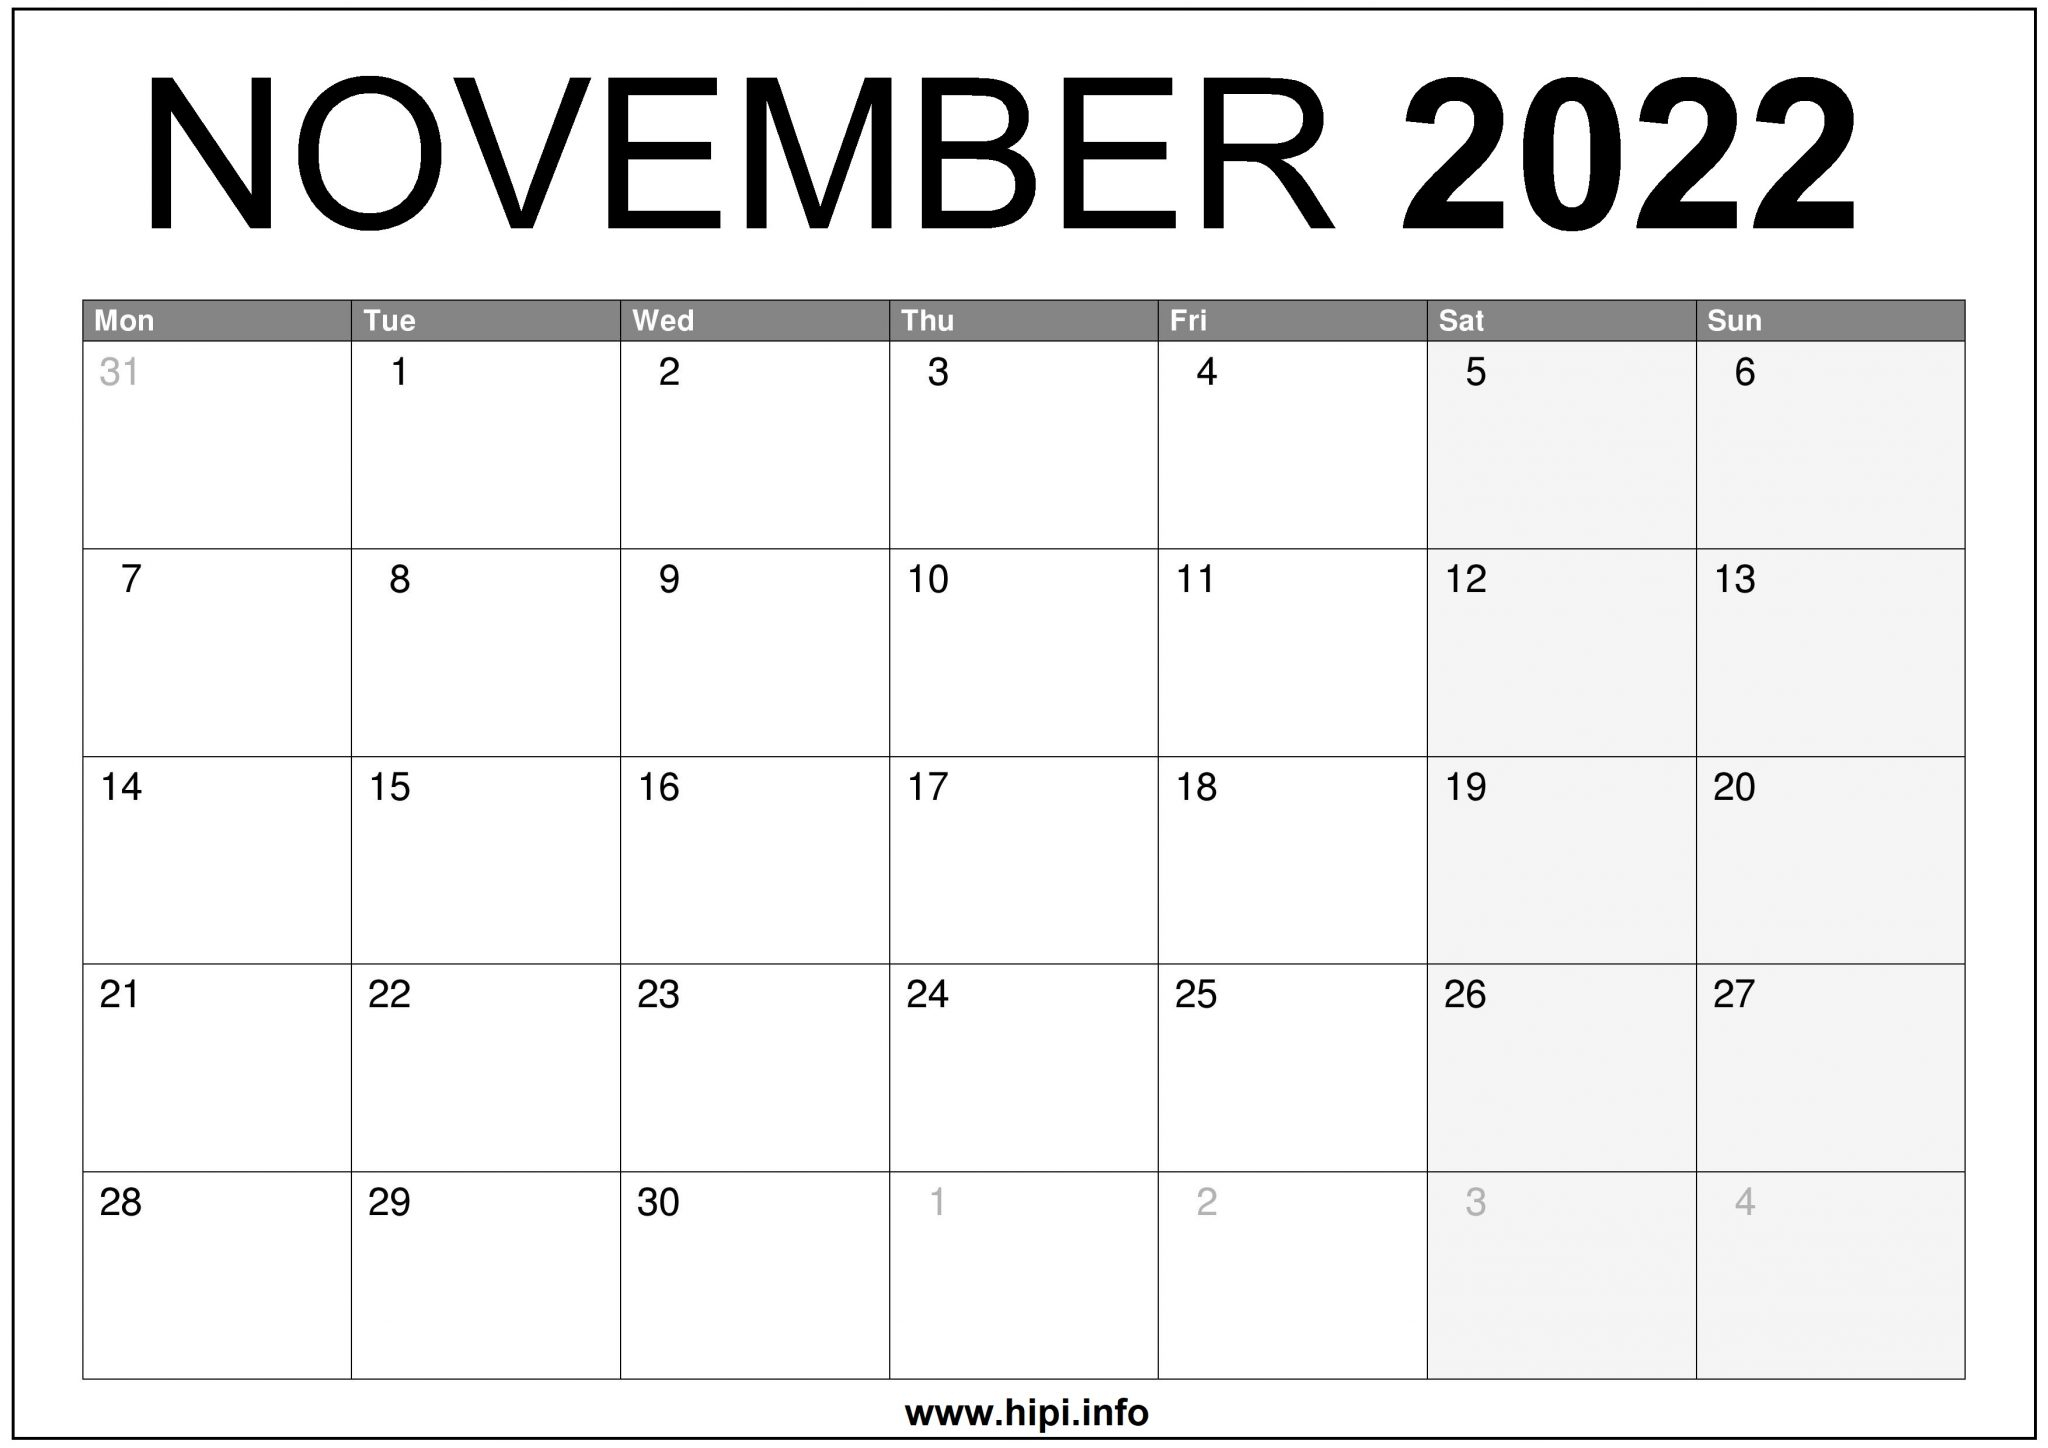 November 2022 Uk Calendar Printable Free - Hipi